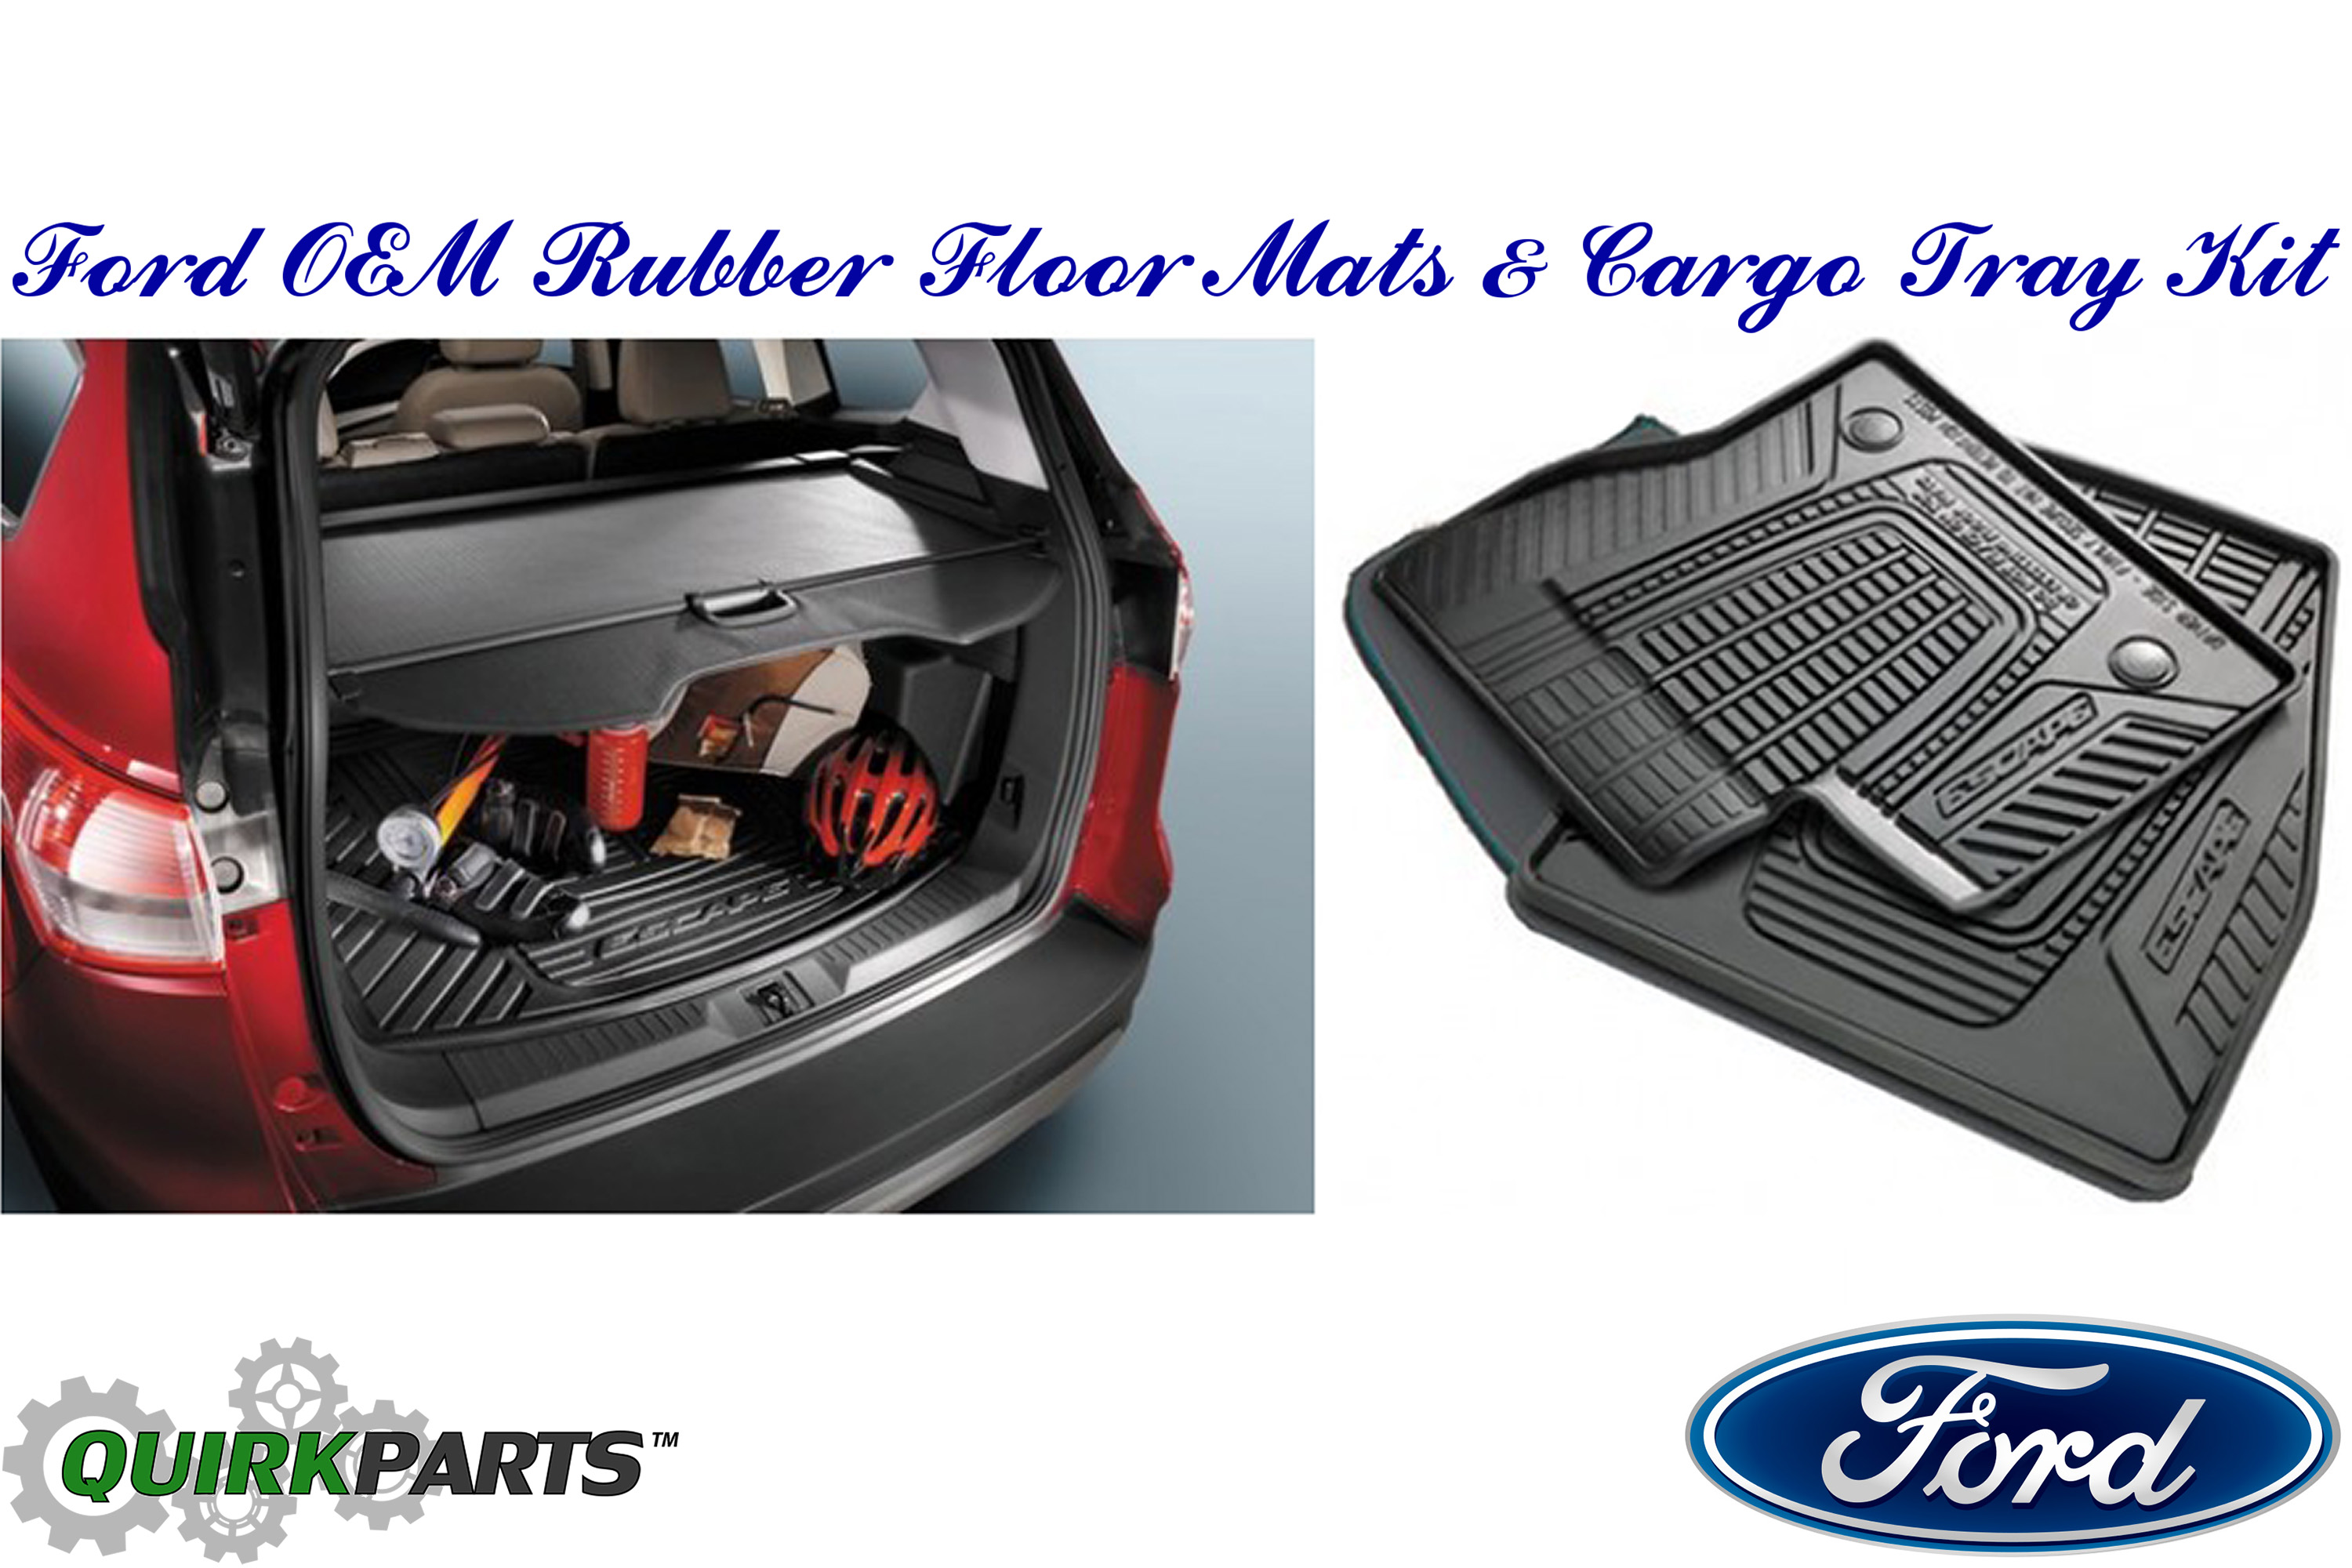 2013 Ford escape rubber floor mats #8